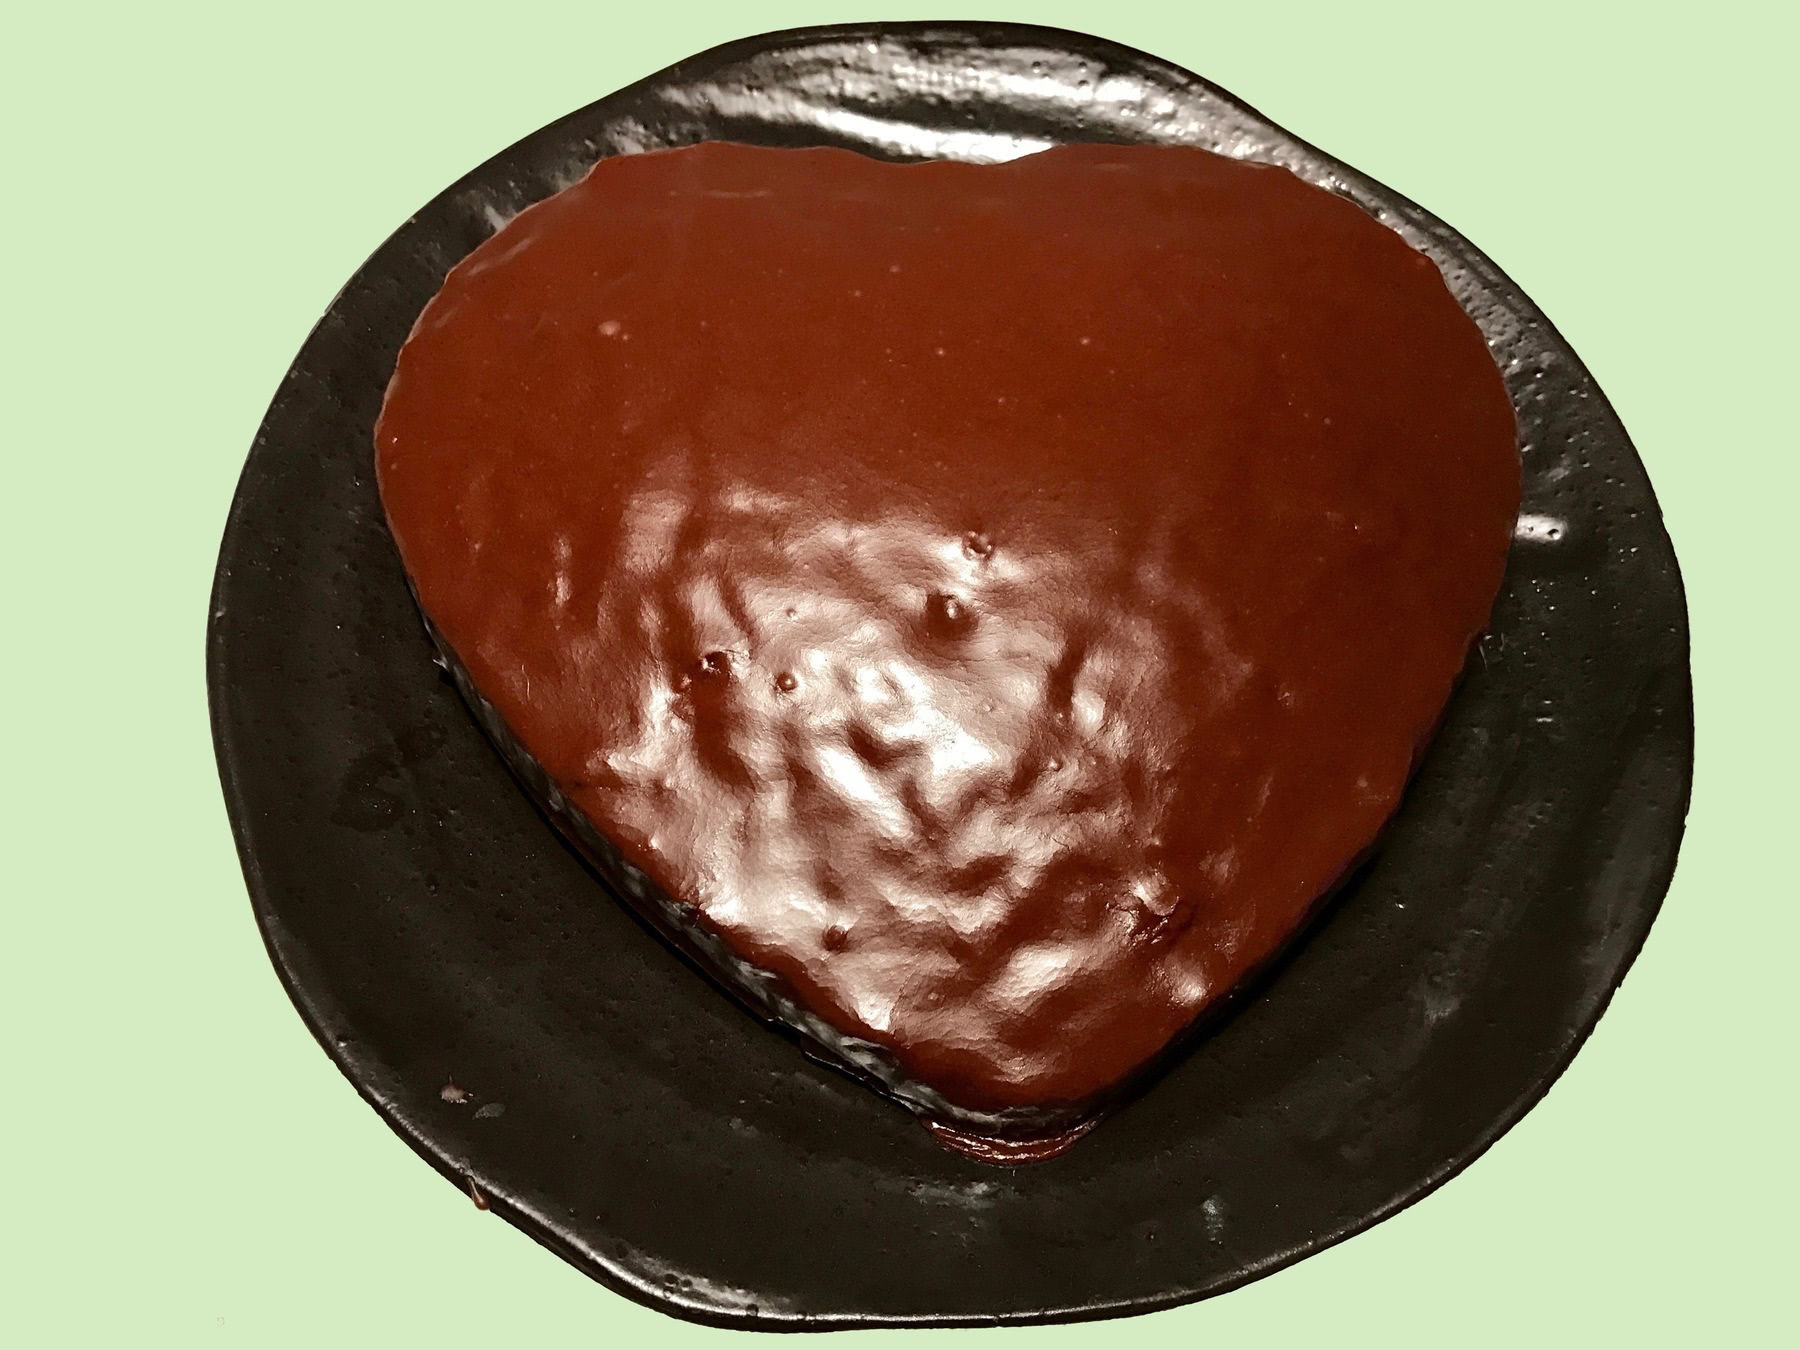 Ferdig, hjerteformet kake